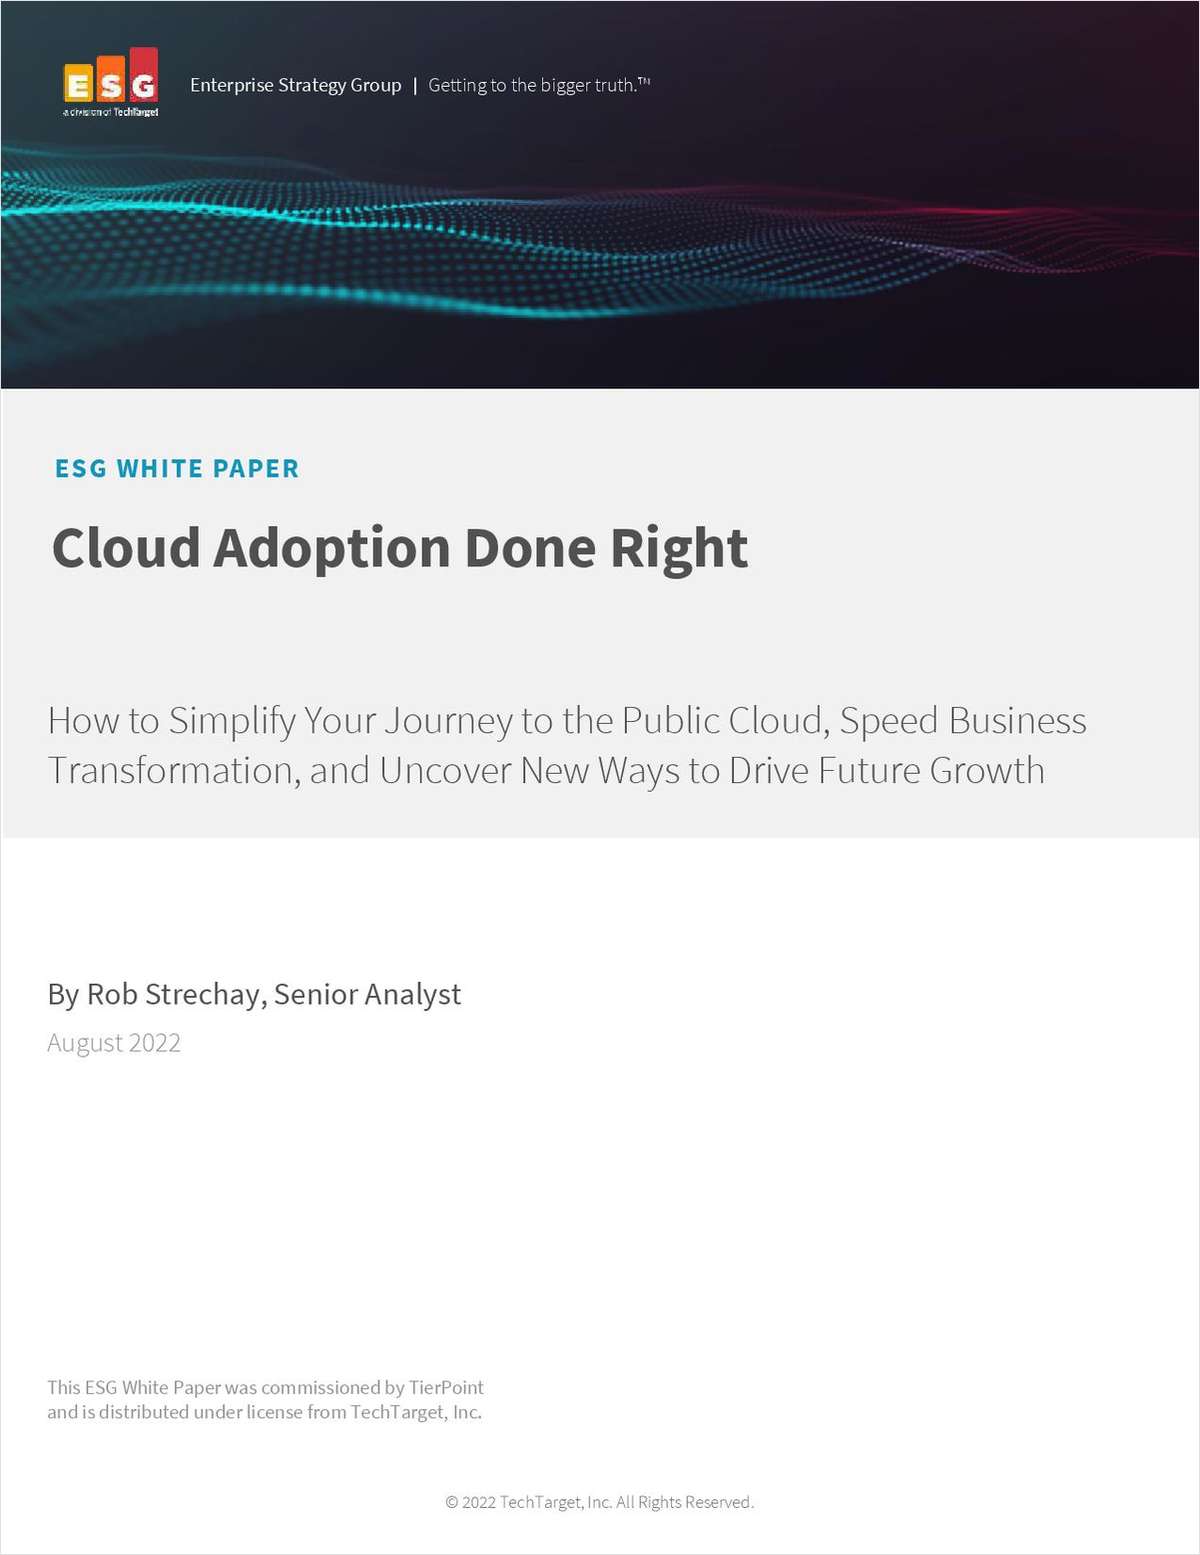 ESG White Paper: Cloud Adoption Done Right